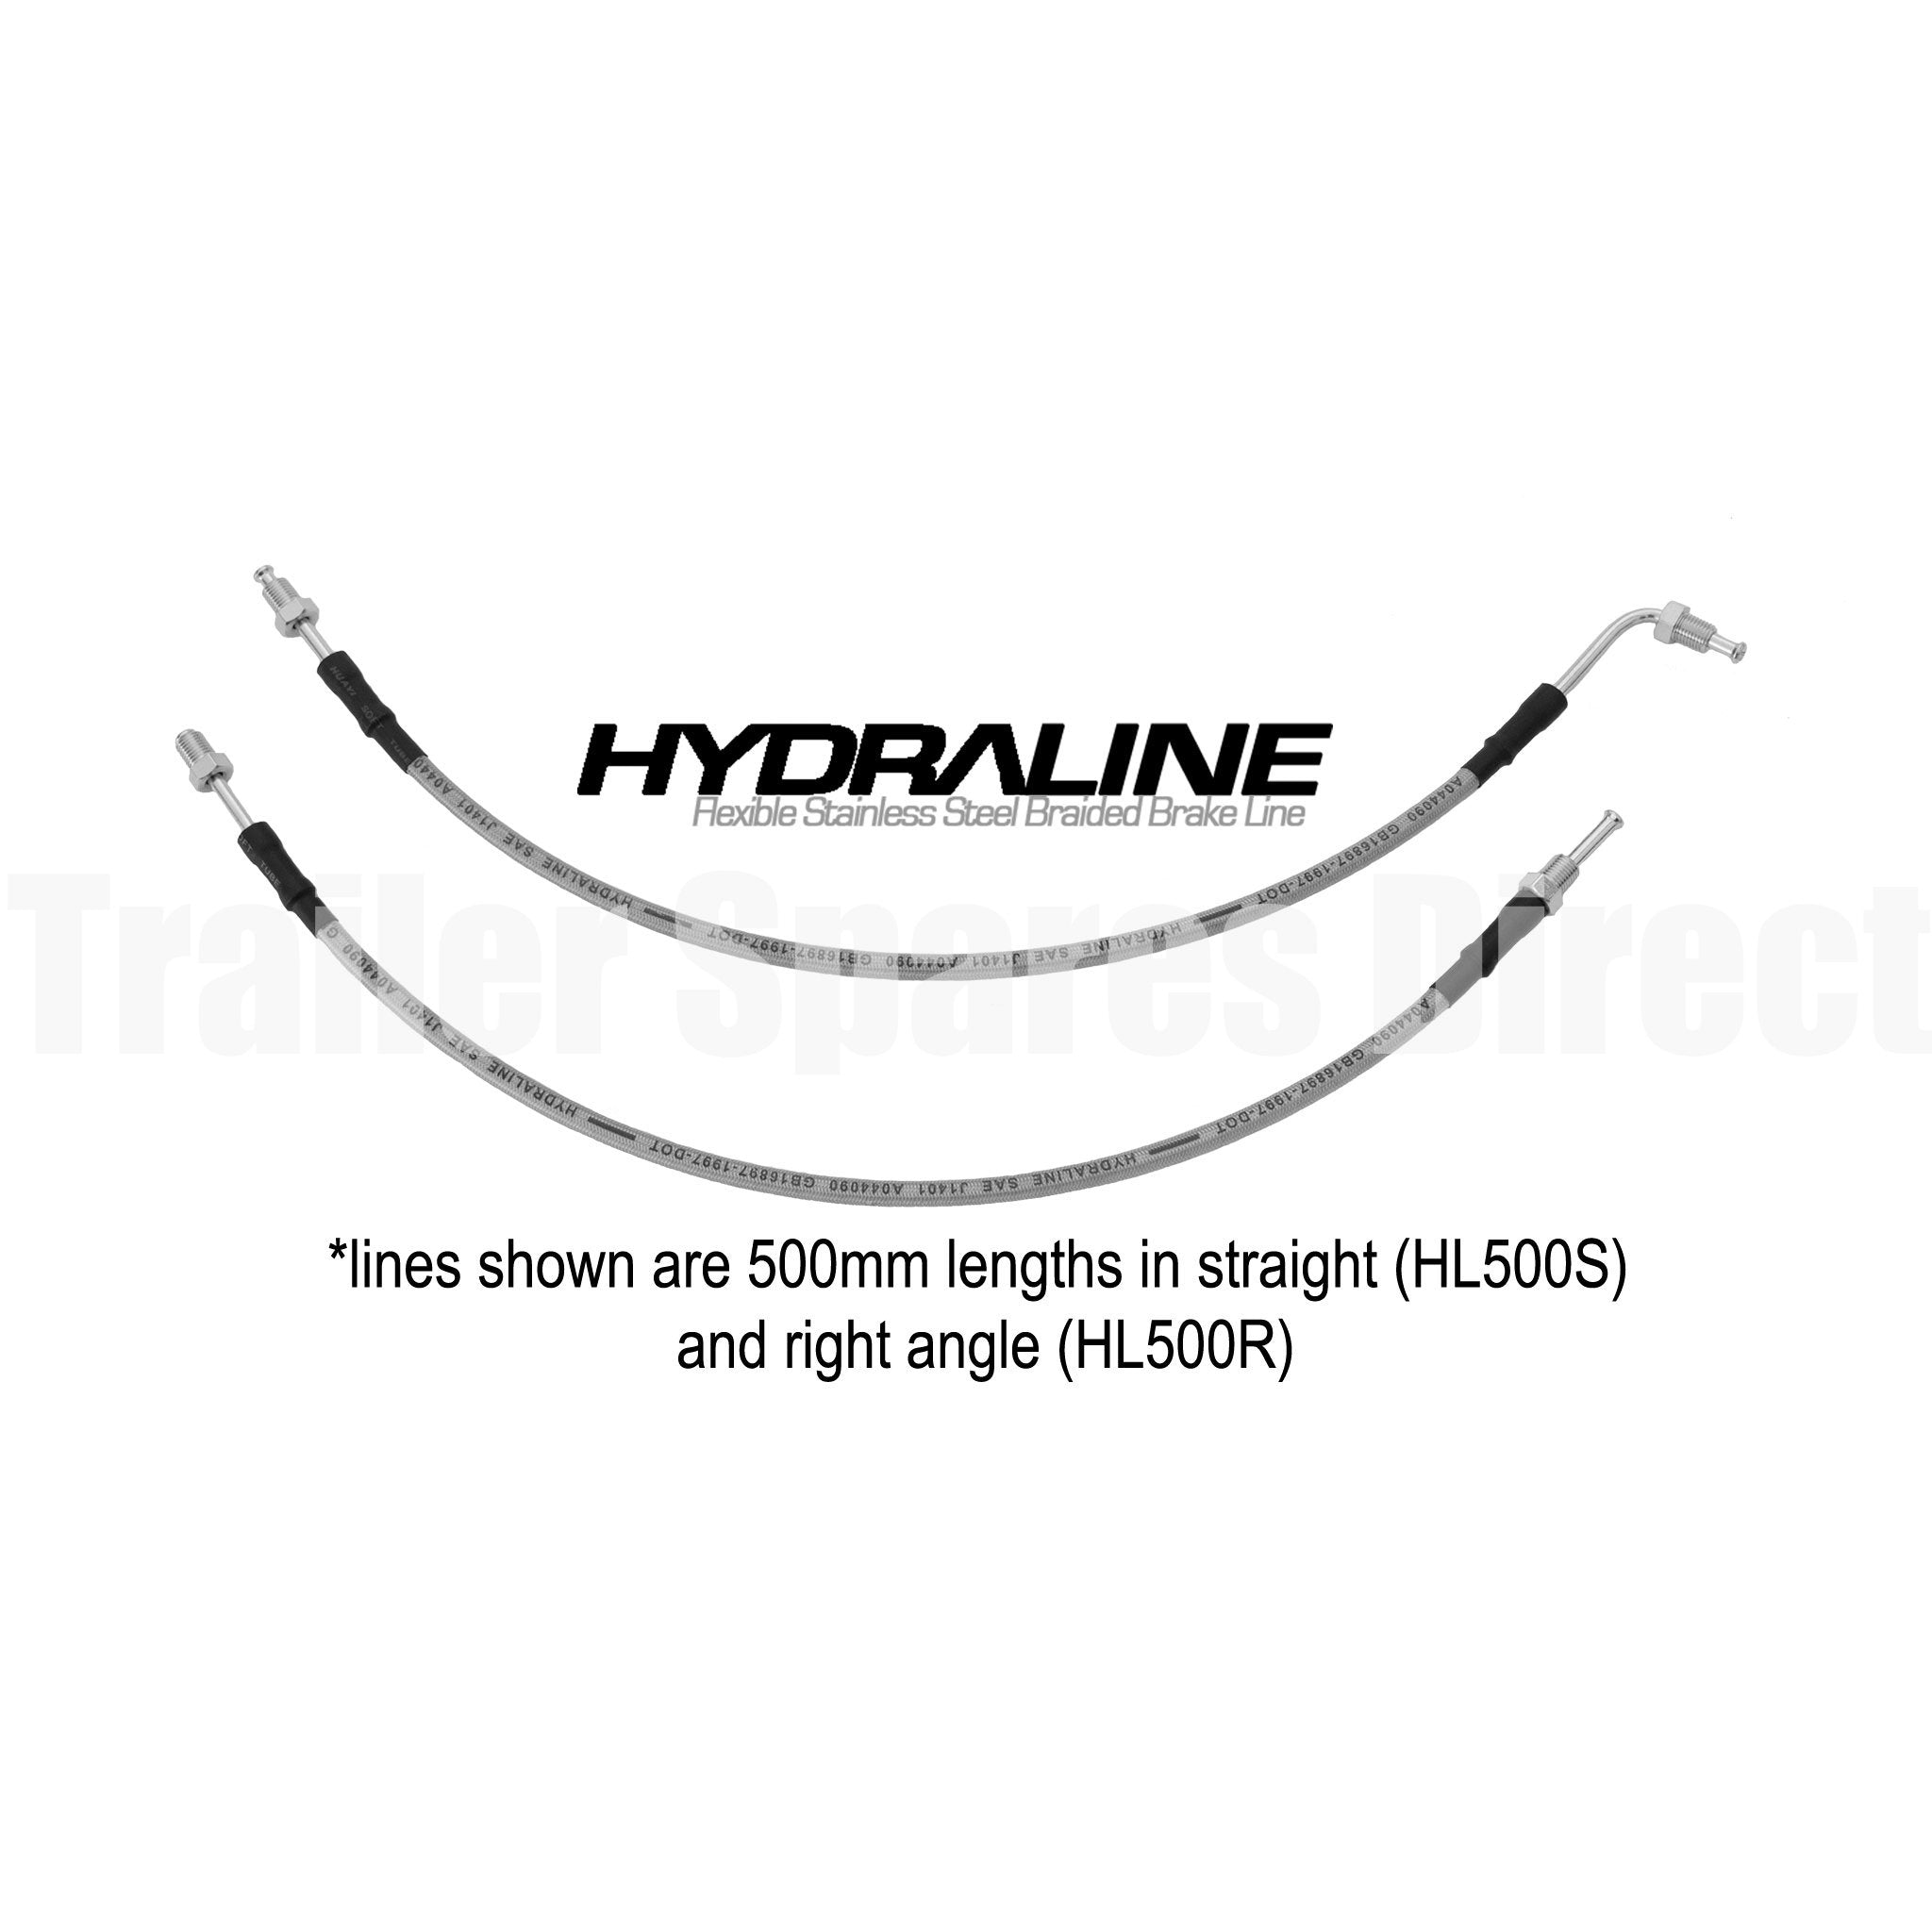 1000mm HydraLine brake hose - straight end